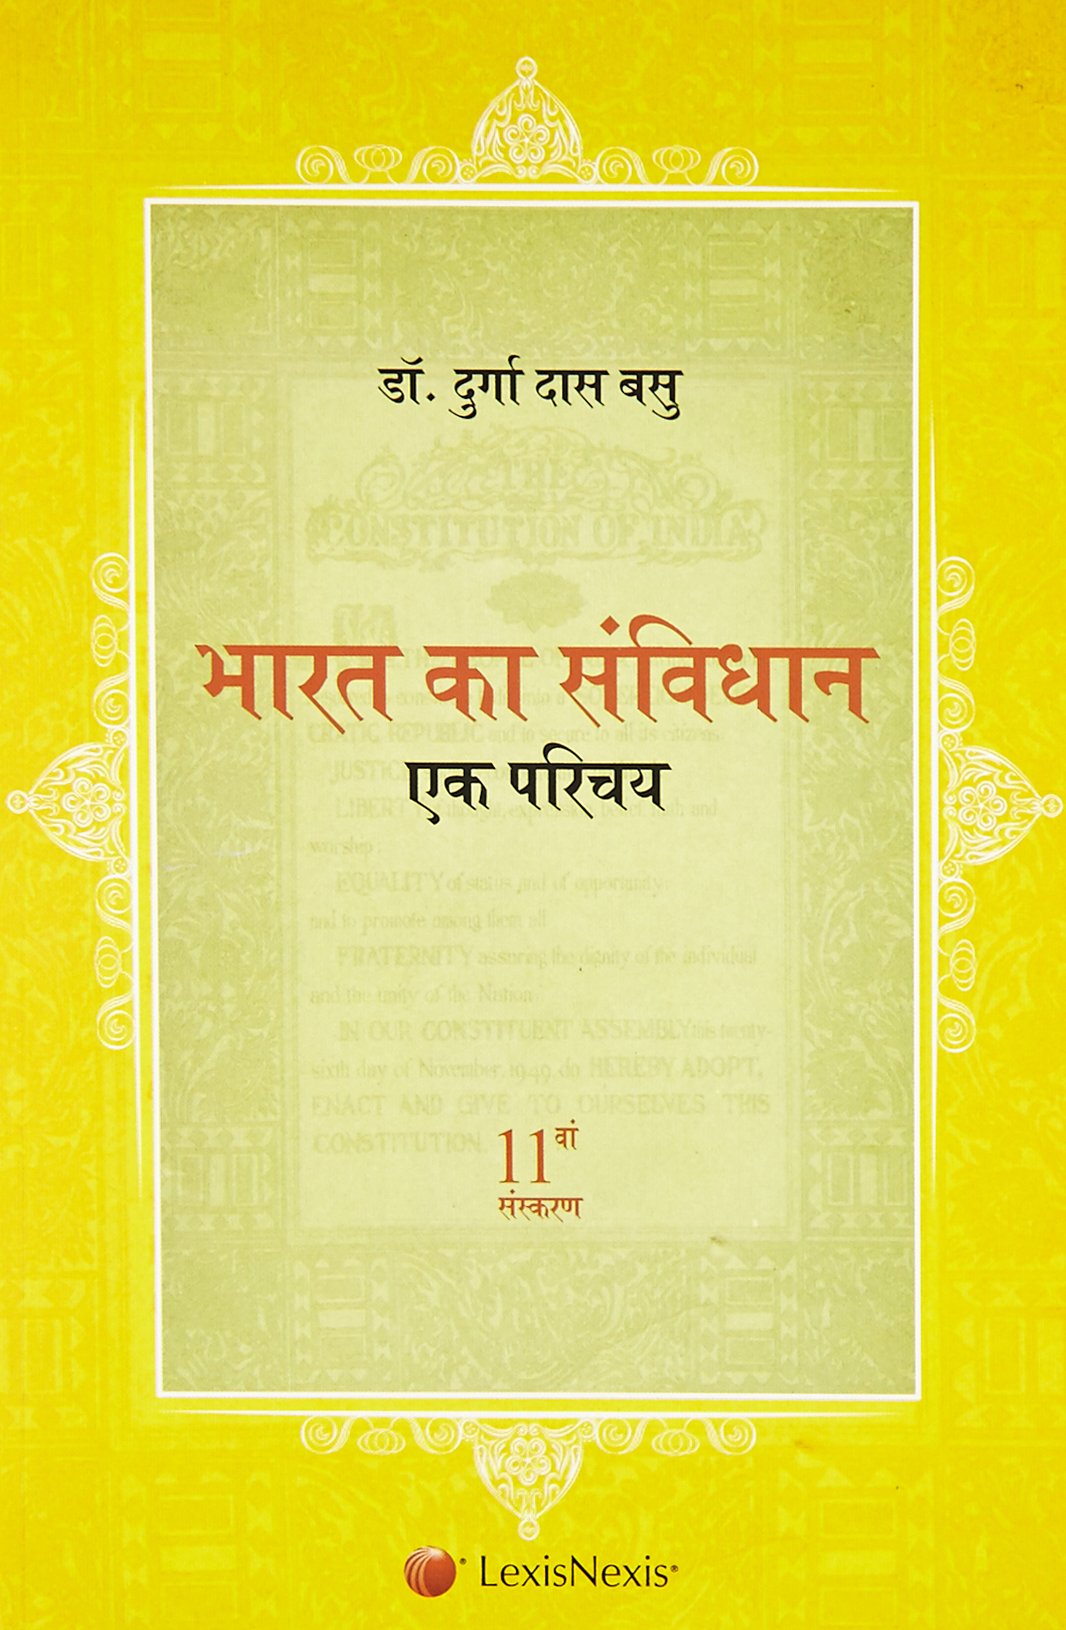 d d basu book pdf hindi